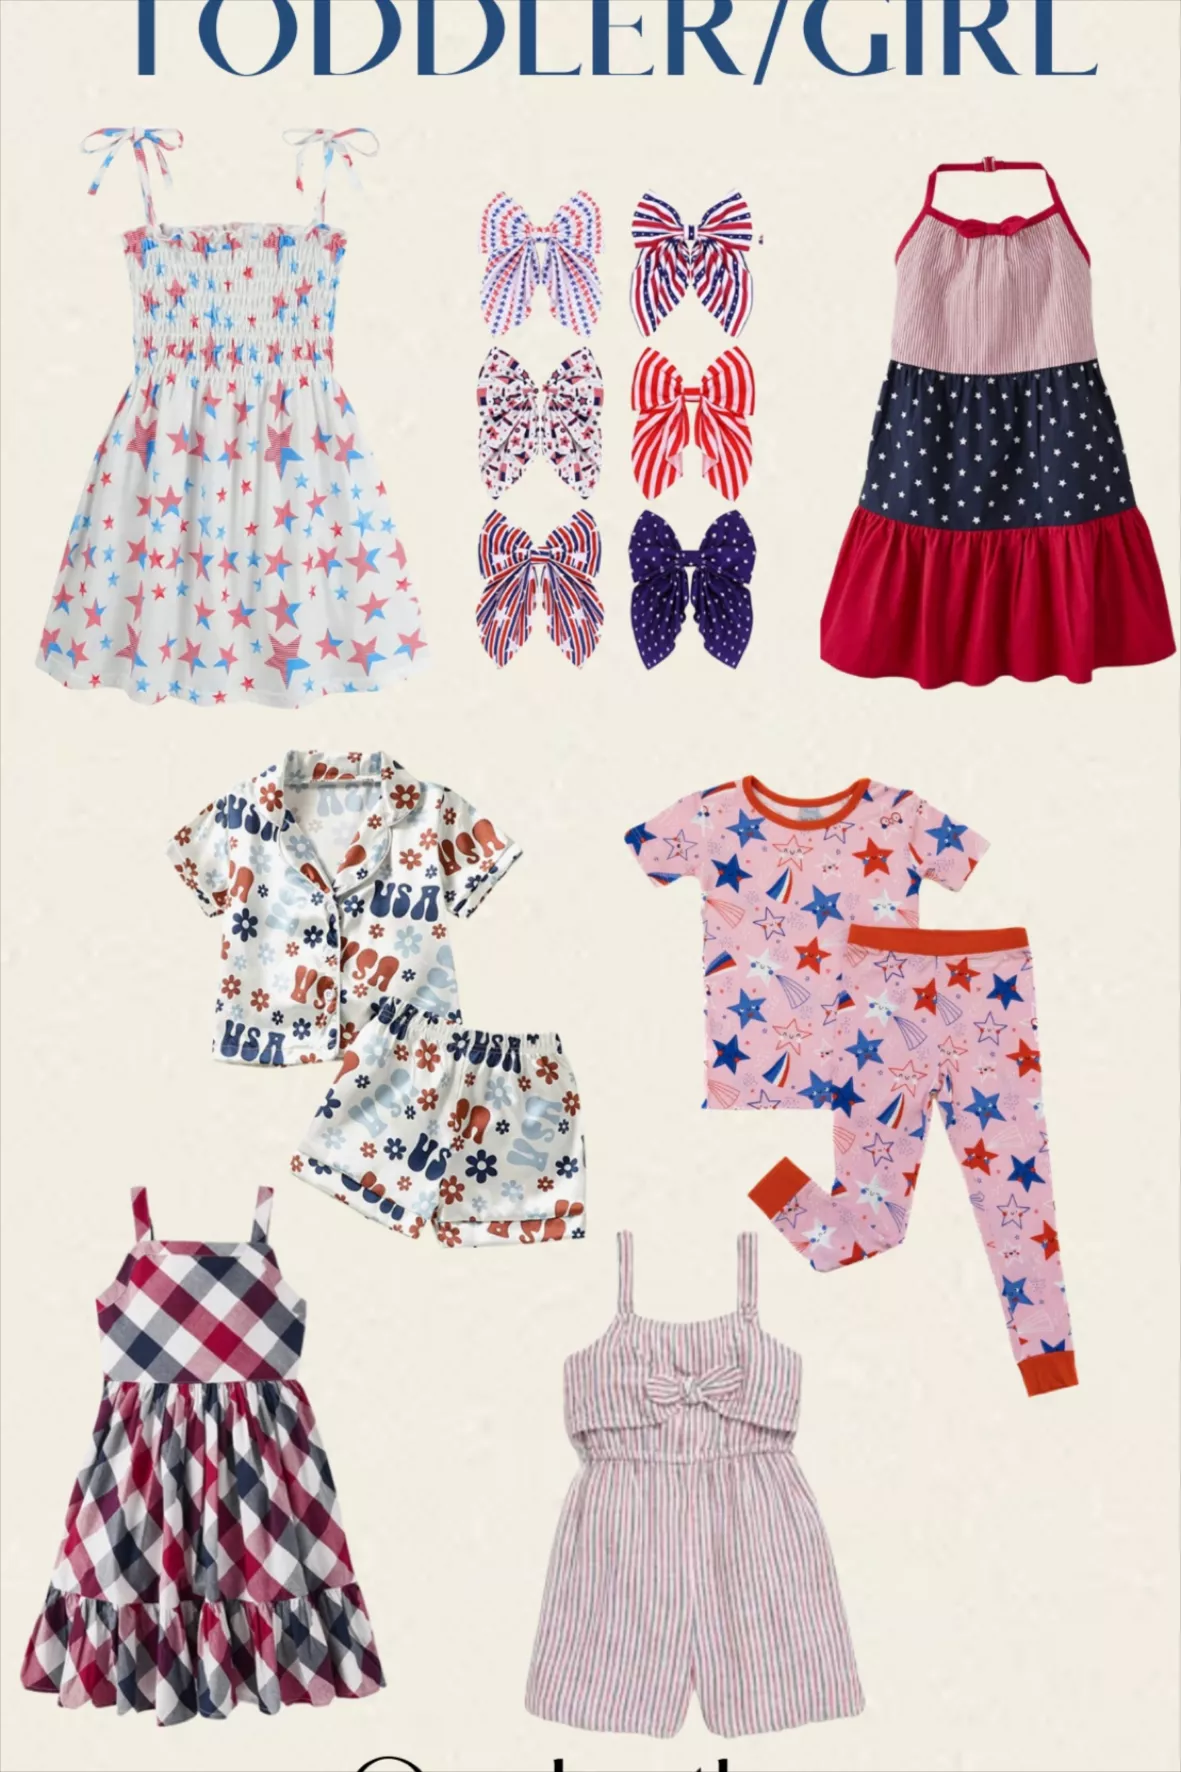 Gymboree Girls' and Toddler Halter Top Dress